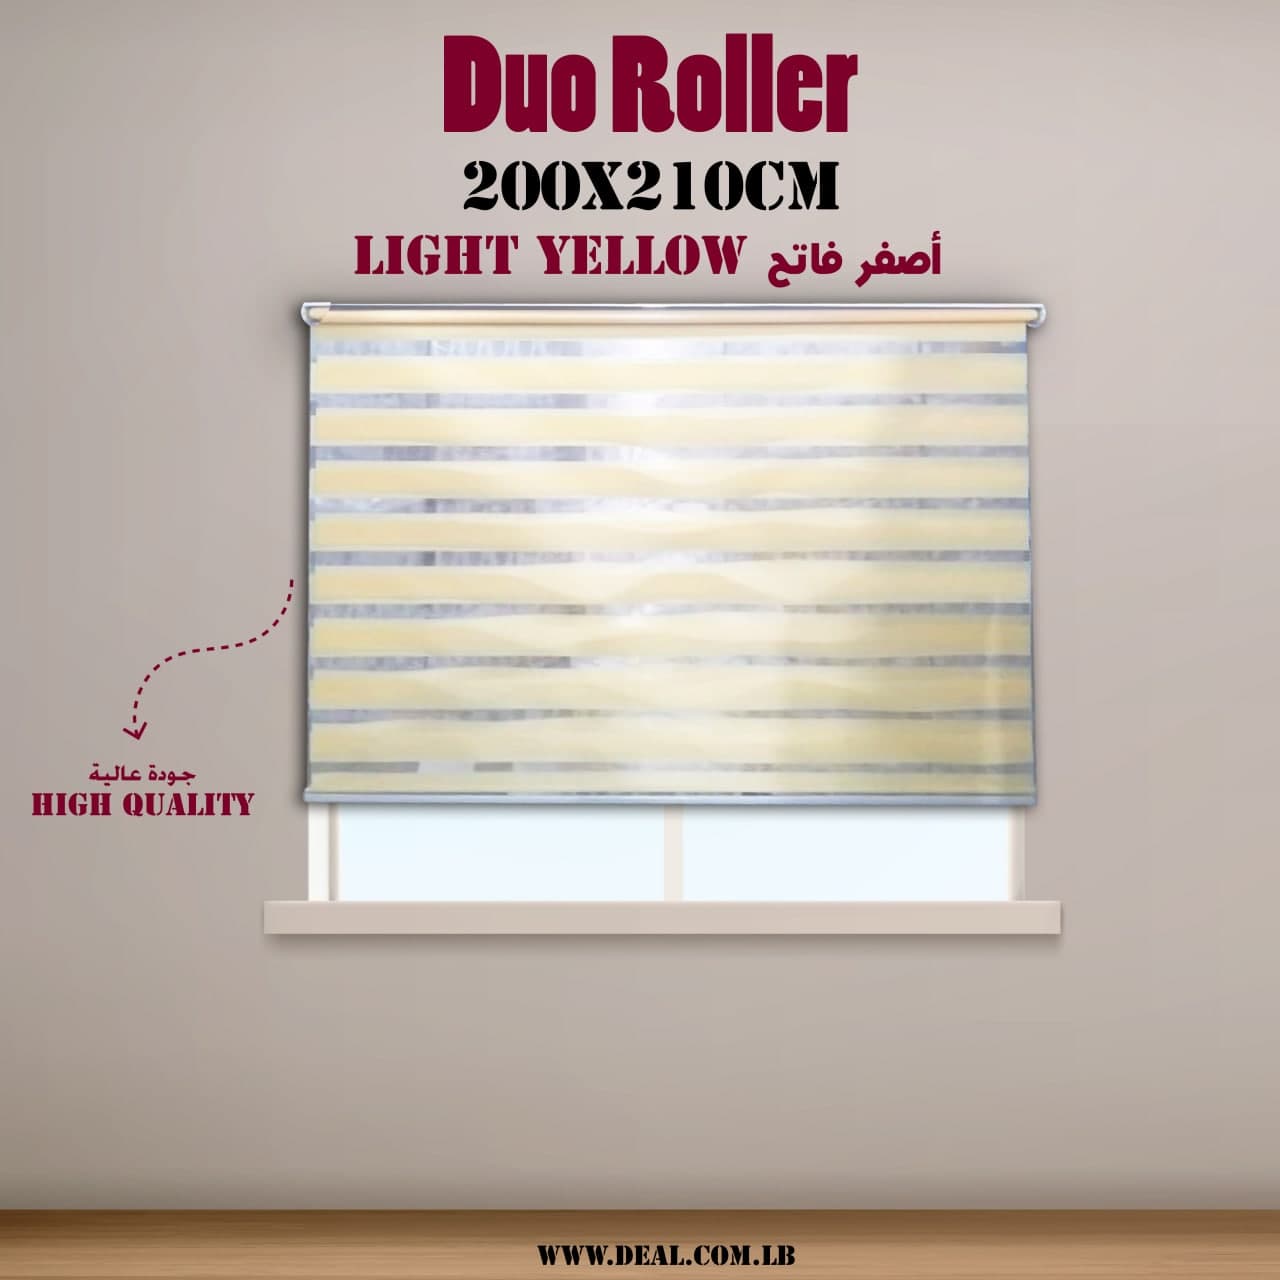 Light Yellow Duo Roller Curtain 200x210cm